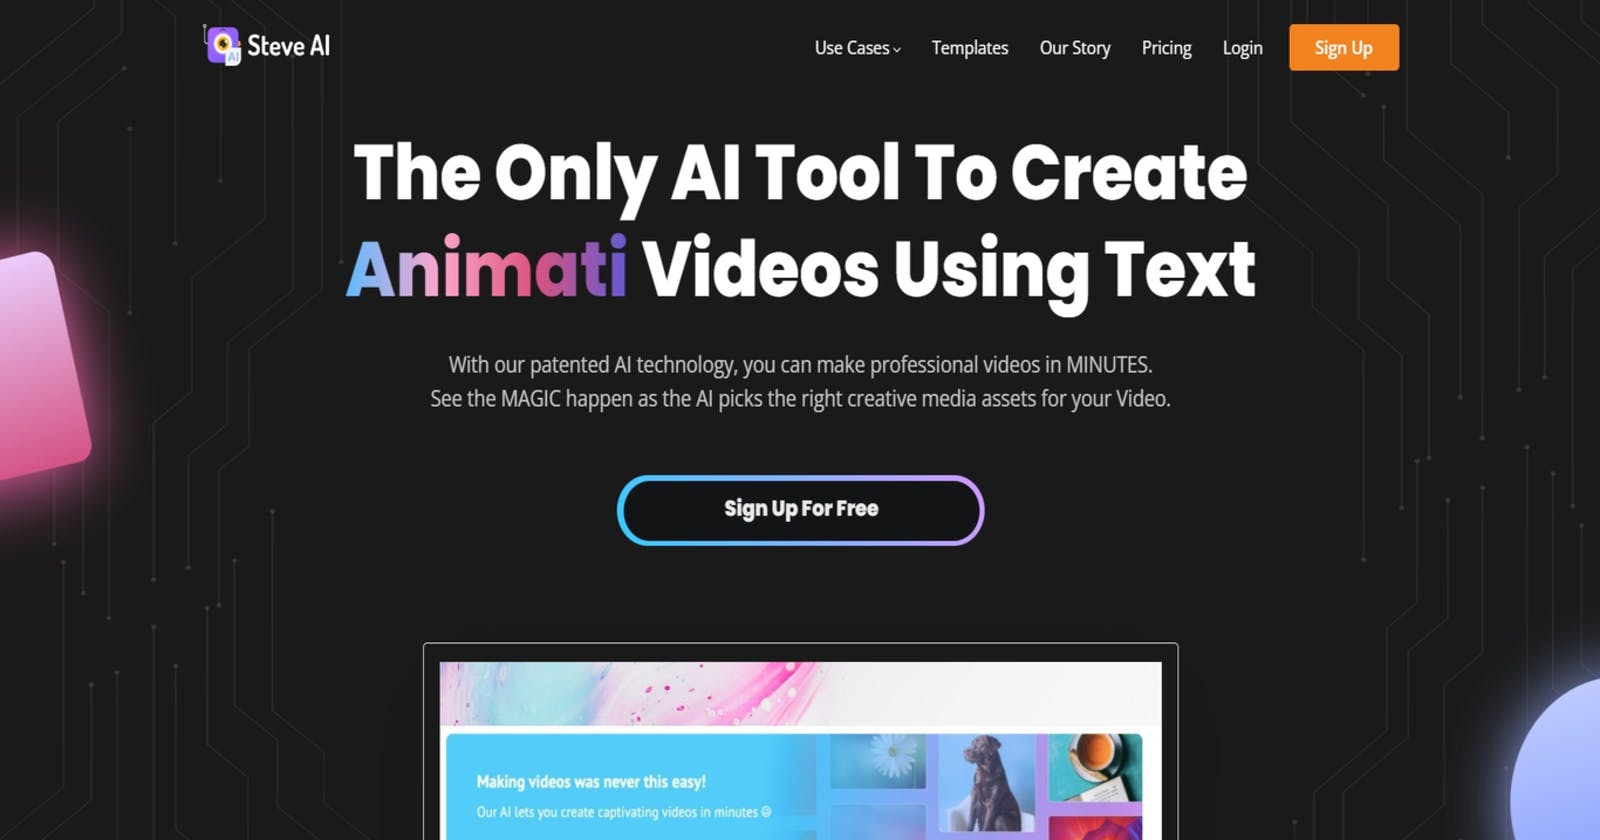 Unleash Your Creative Power with Steve AI - AI Video Creation Made Easy